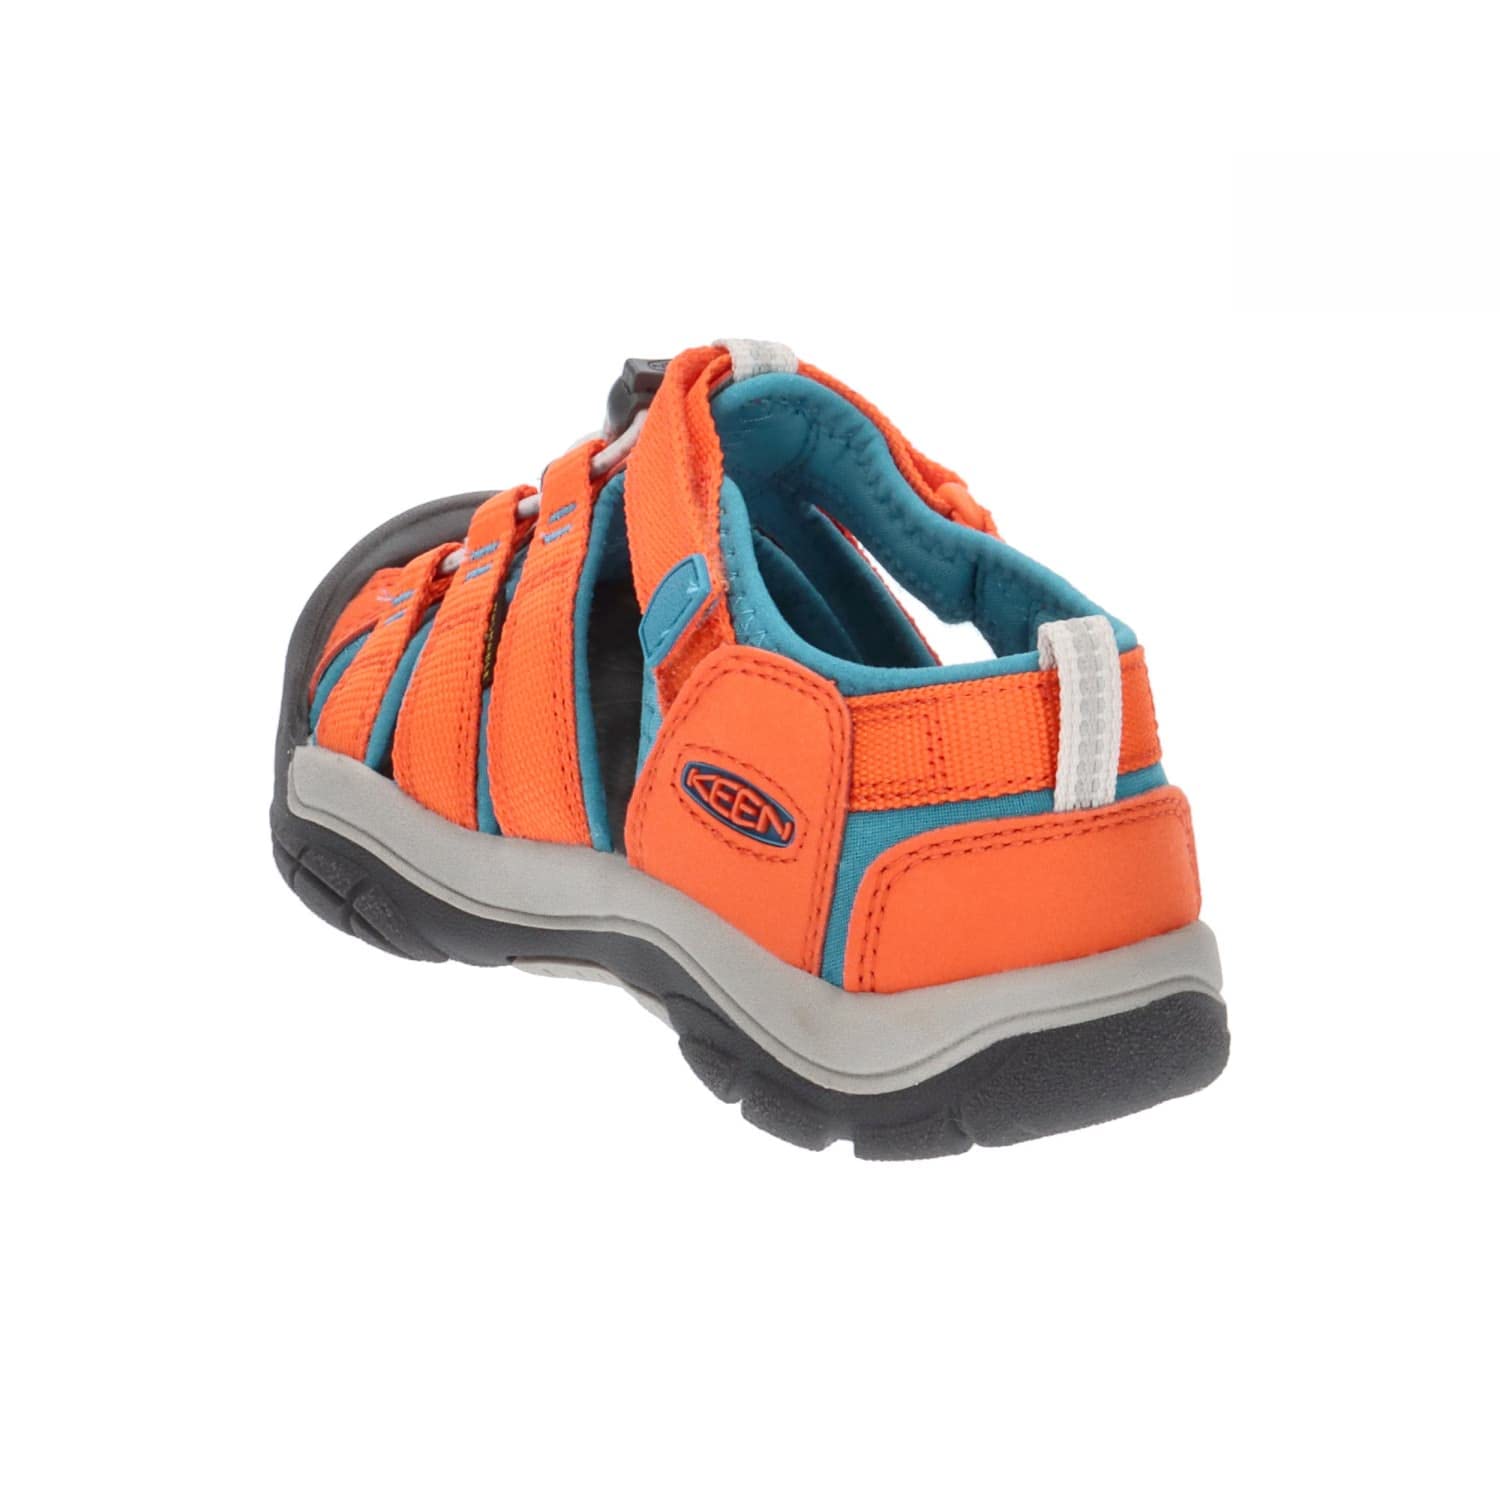 KEEN Newport H2 Closed Toe Water Sandals, Safety Orange/Fjord Blue, 1 US Unisex Big Kid